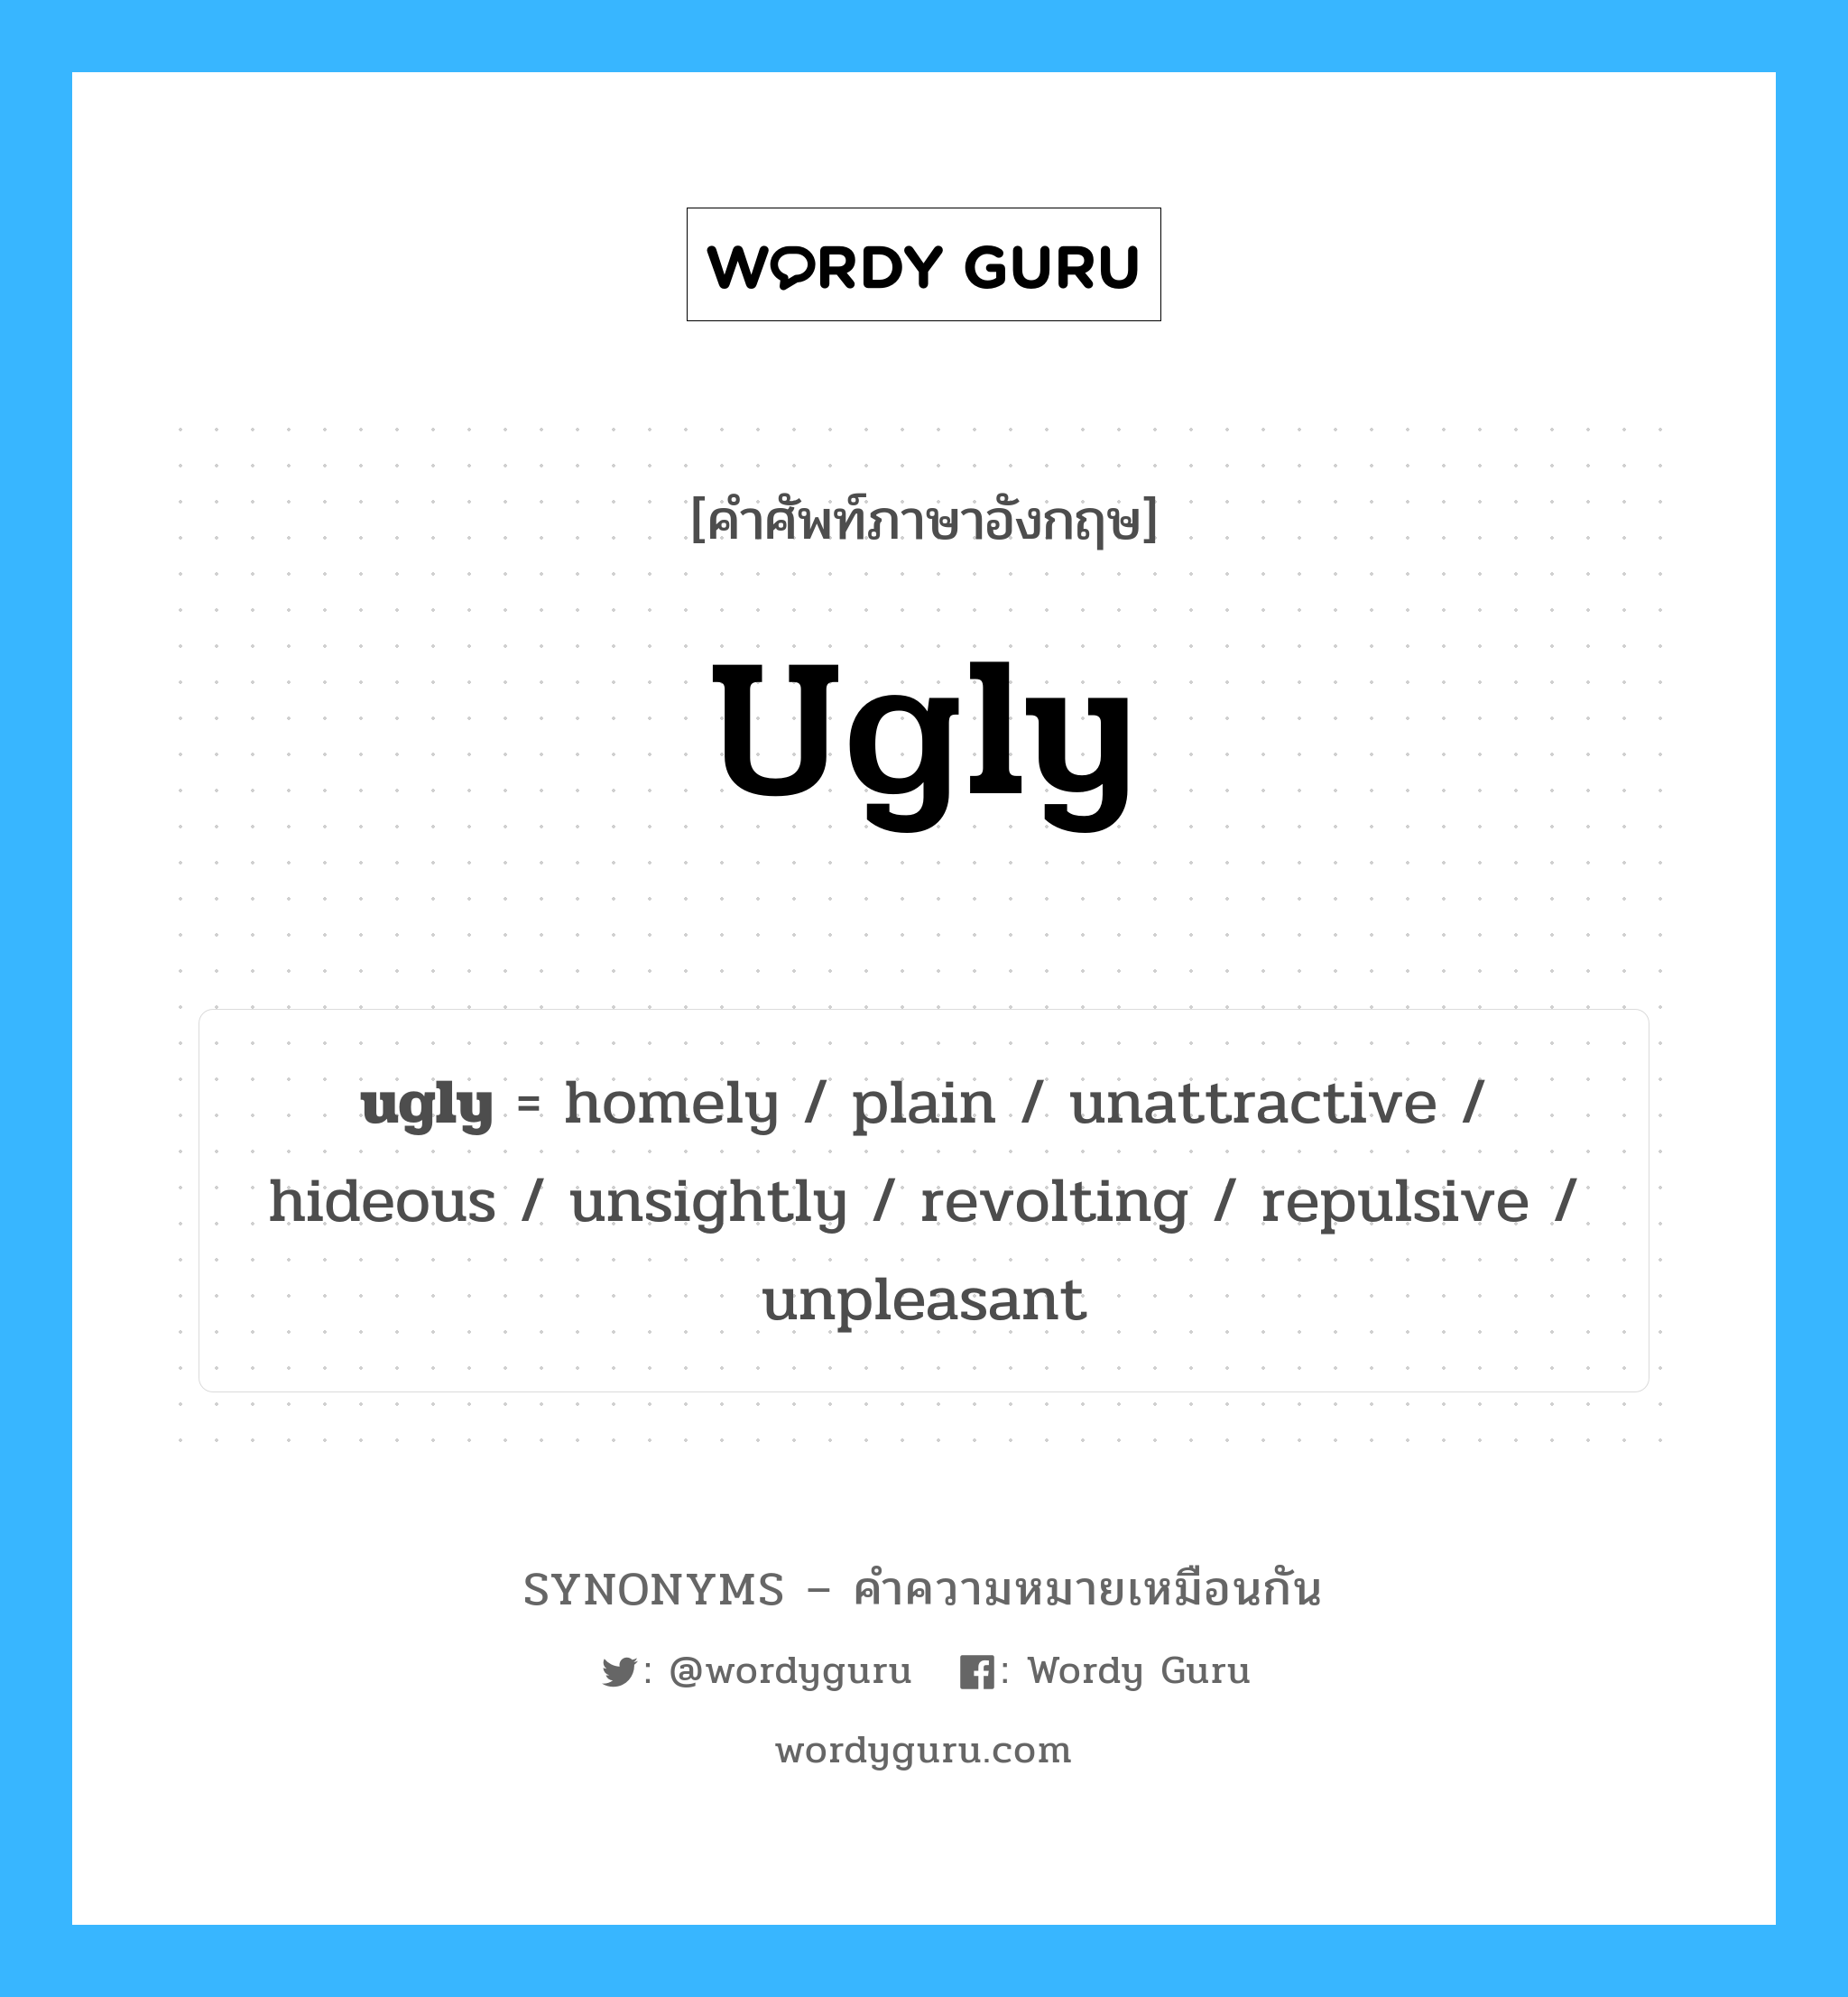 homely เป็นหนึ่งใน ugly และมีคำอื่น ๆ อีกดังนี้, คำศัพท์ภาษาอังกฤษ homely ความหมายคล้ายกันกับ ugly แปลว่า อบอุ่นเหมือนบ้าน หมวด ugly